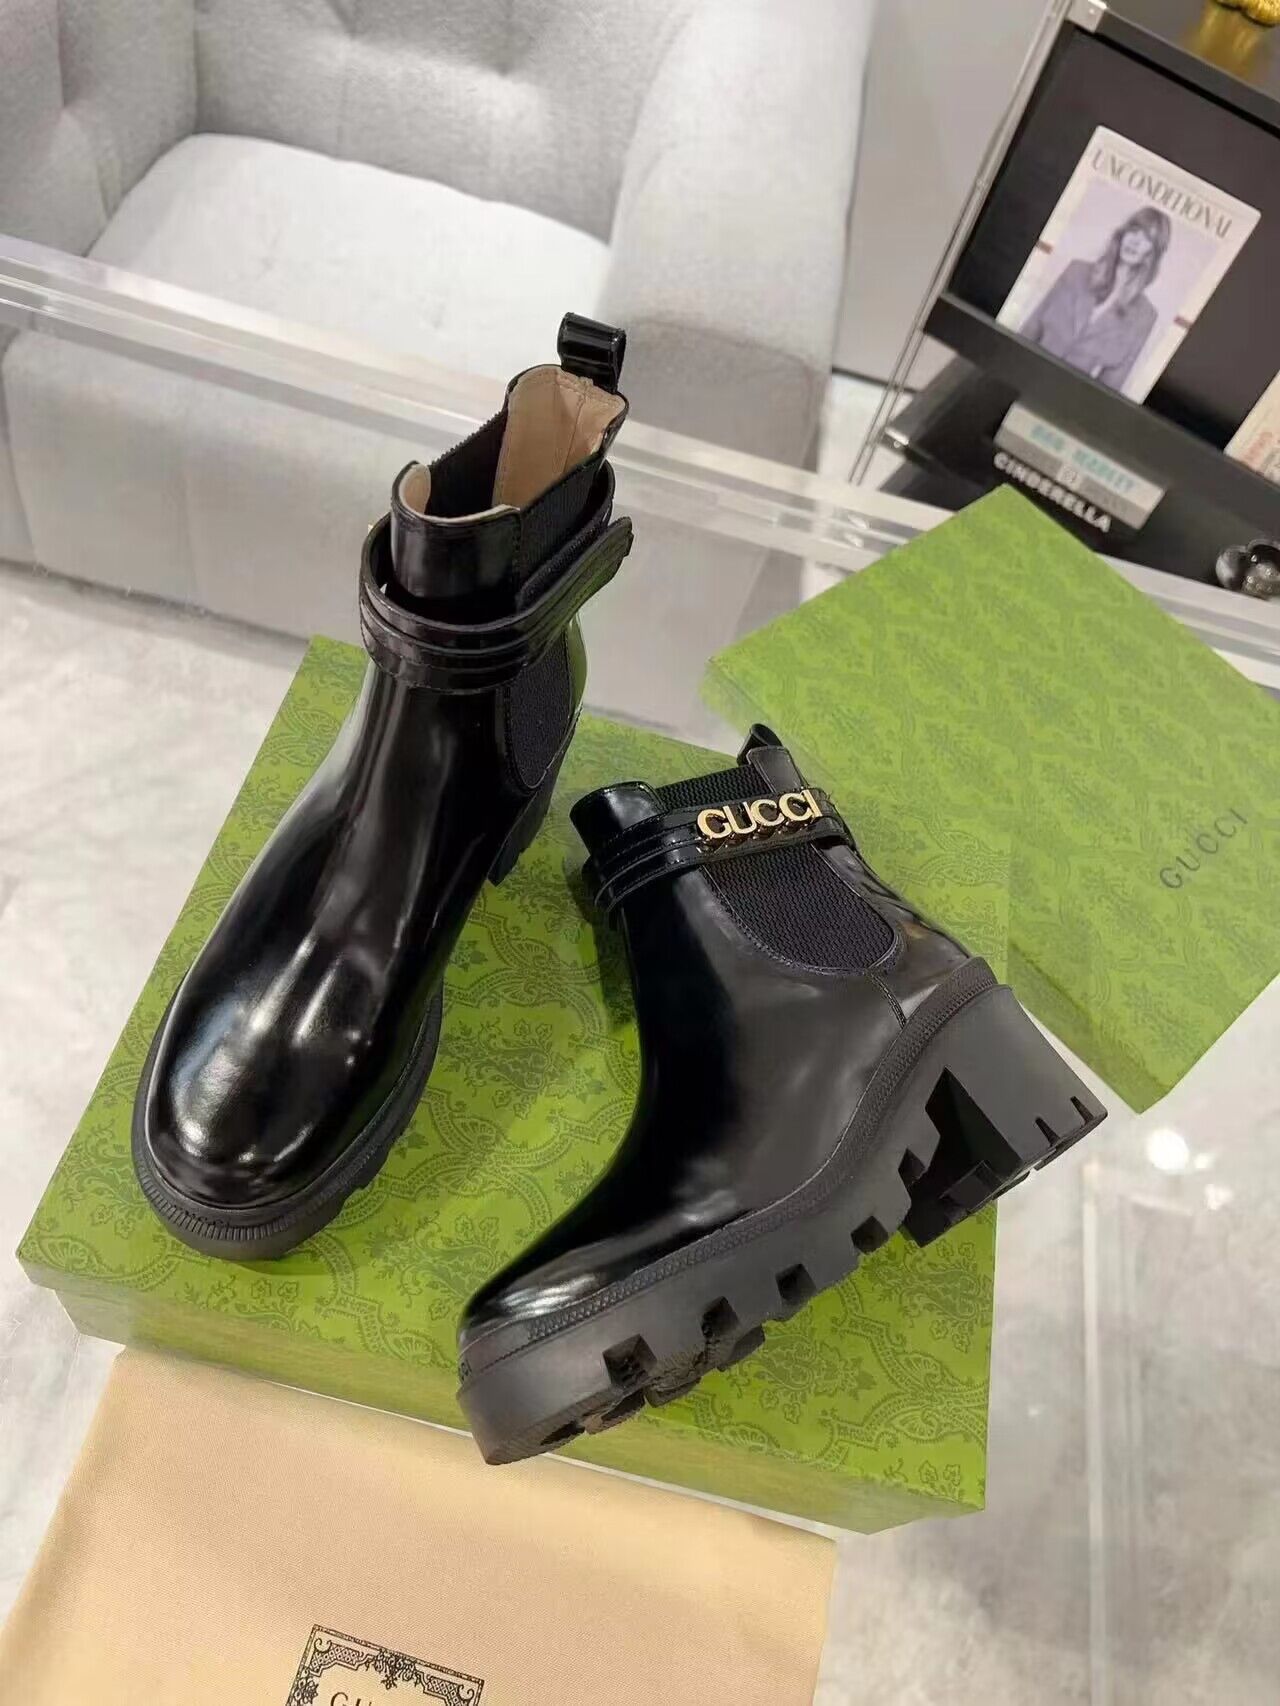 Gucci Boots G70293 Black